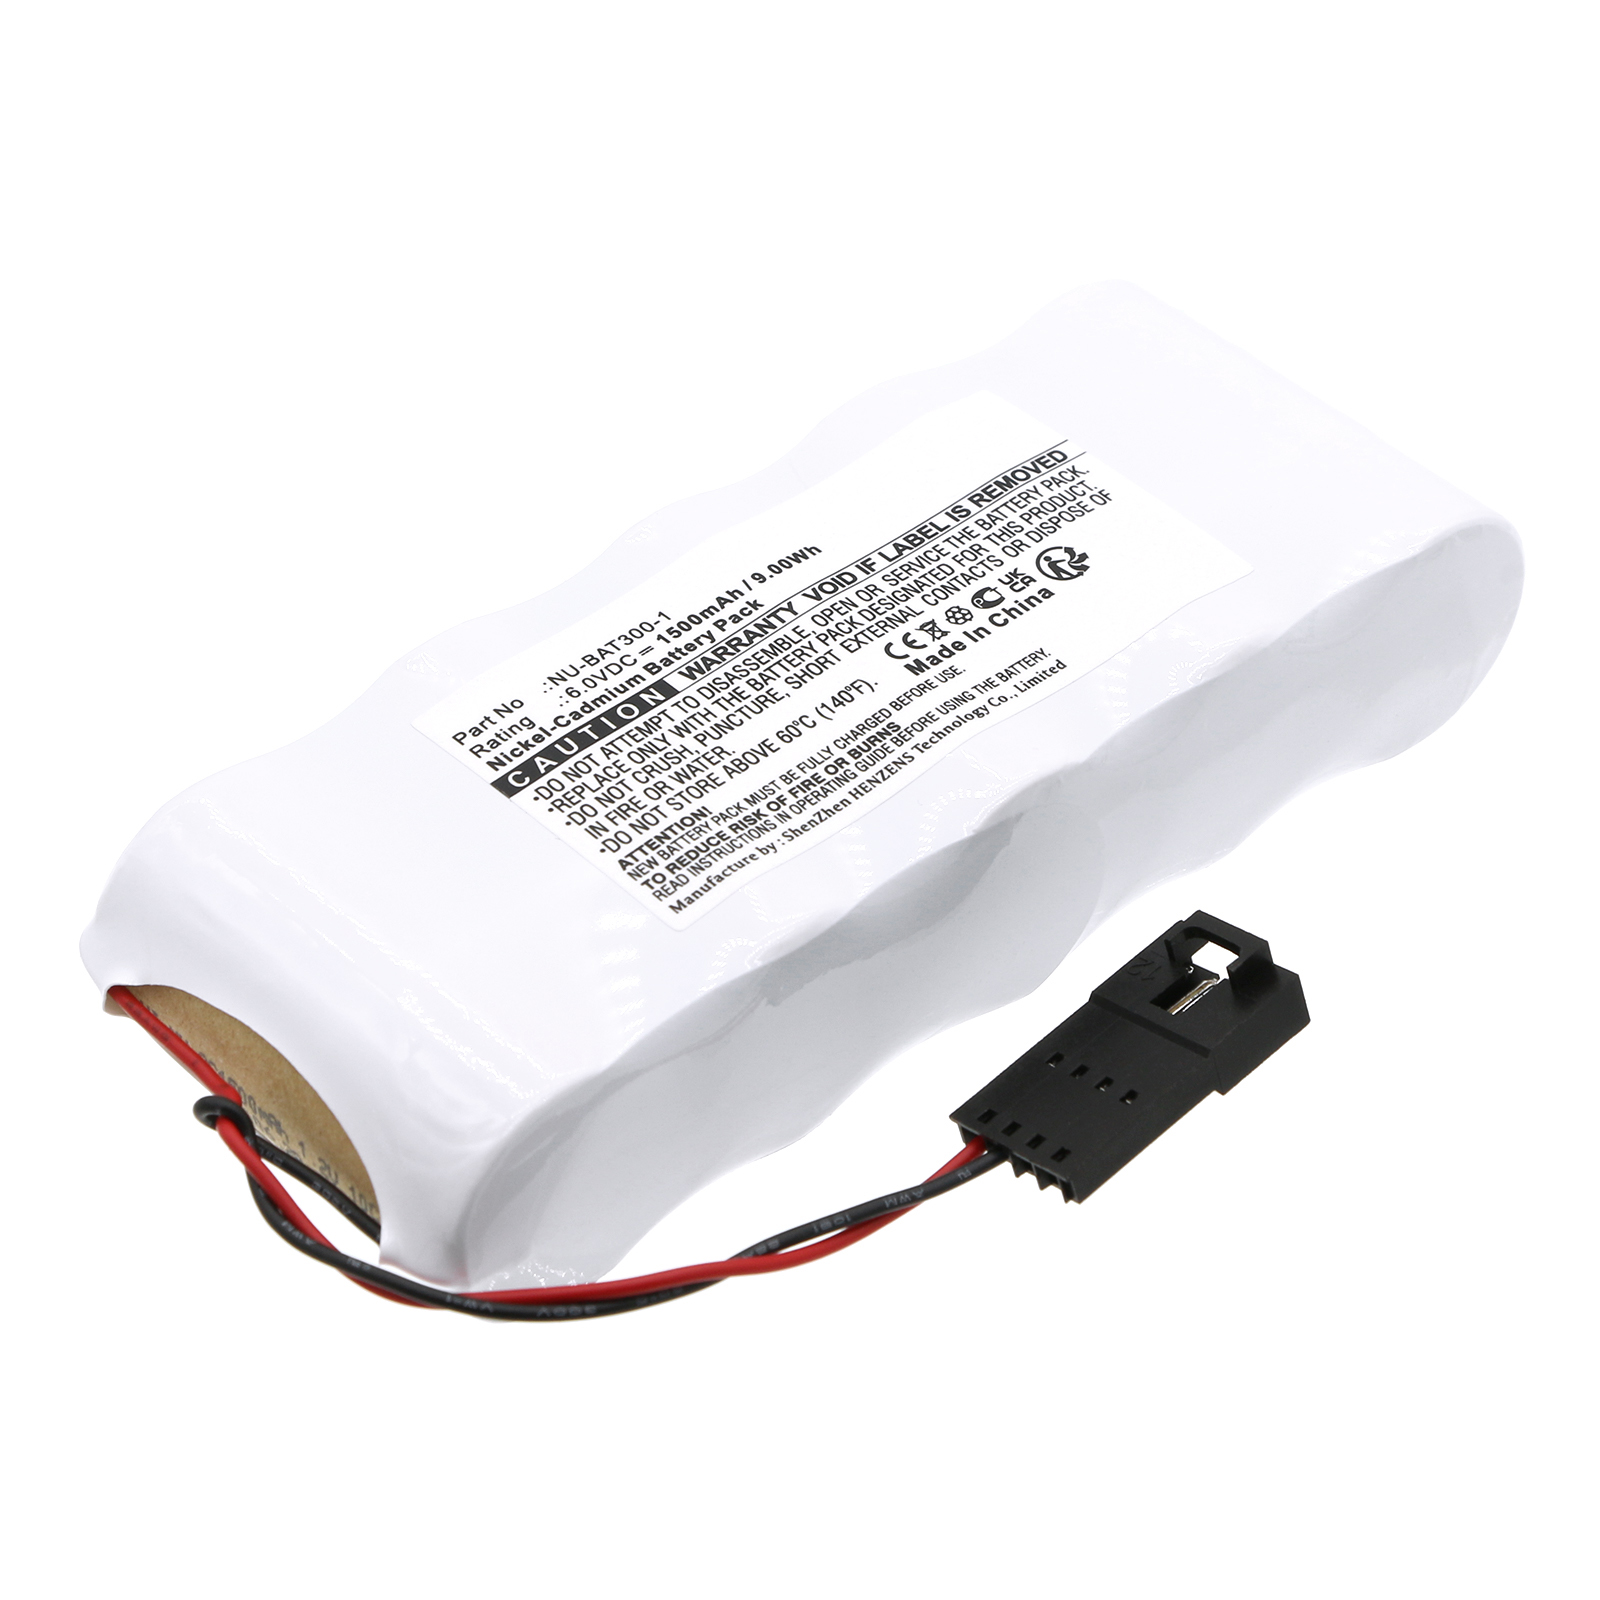 Synergy Digital PLC Battery, Compatible with JOHNSON NU-BAT300-1 PLC Battery (Ni-CD, 6V, 1500mAh)